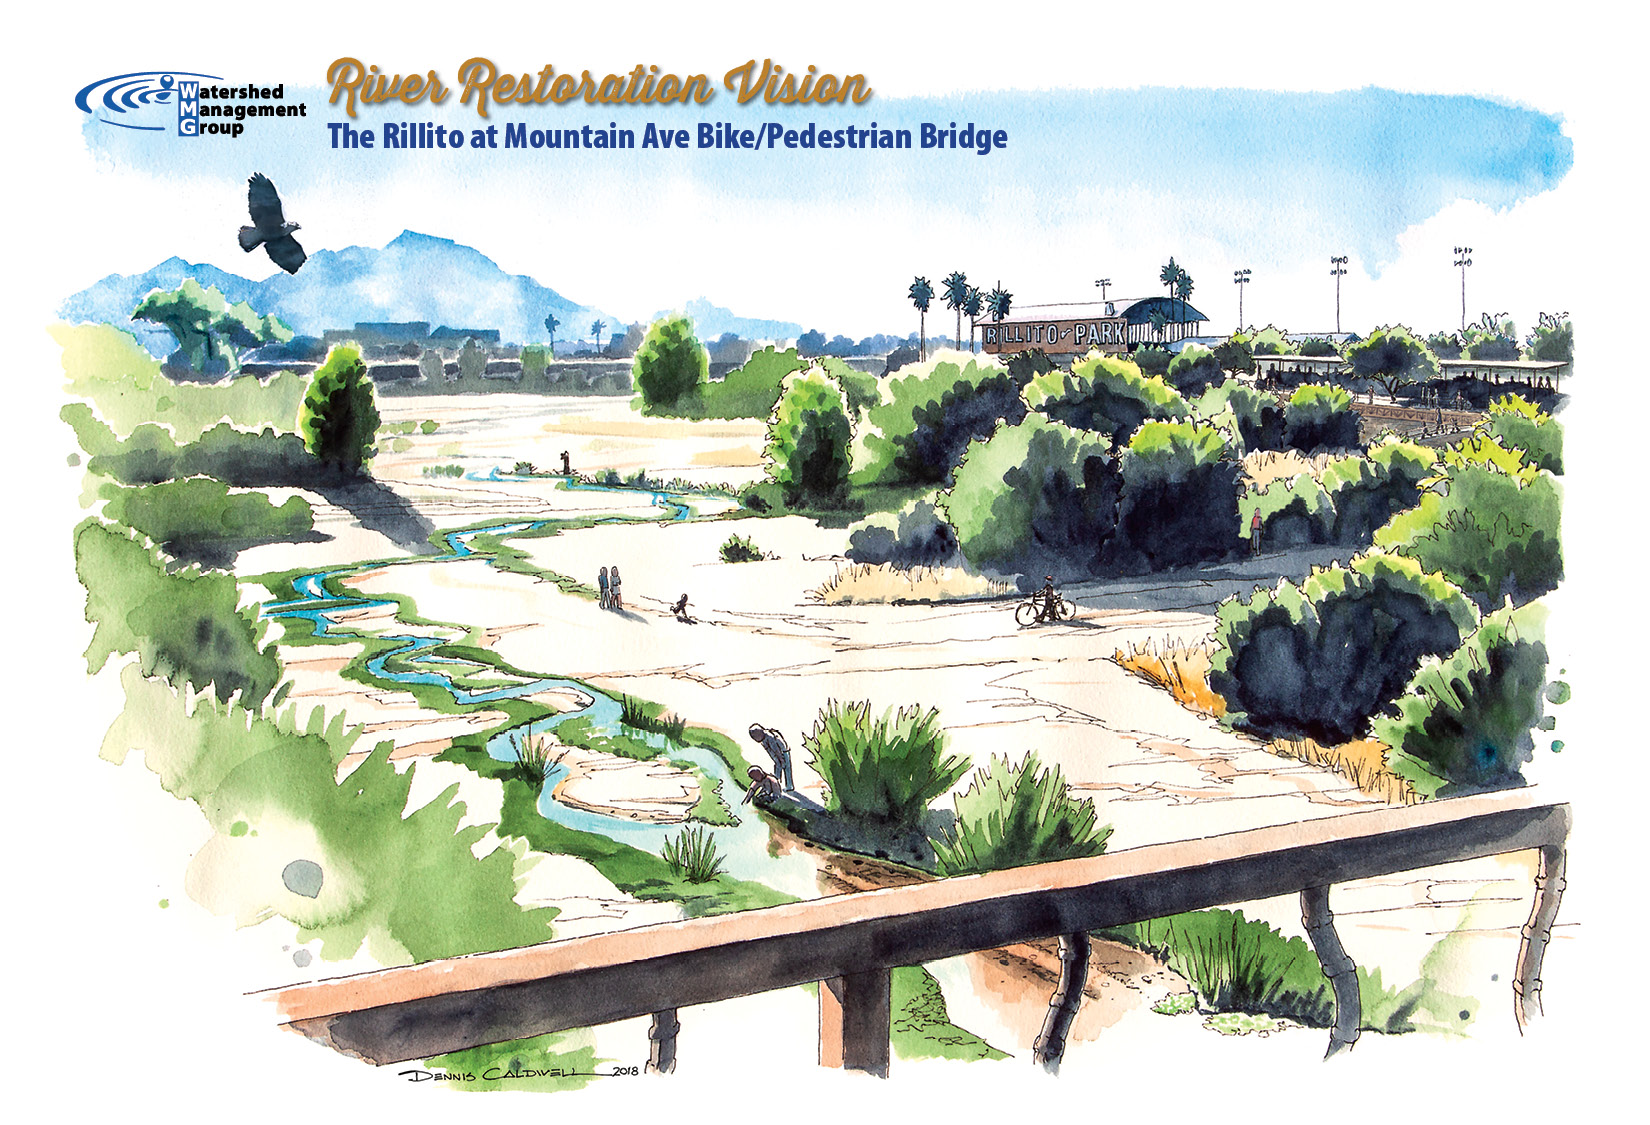 River restoration vision - the Rillito River at Mountain Ave bike/pedestrian bridge